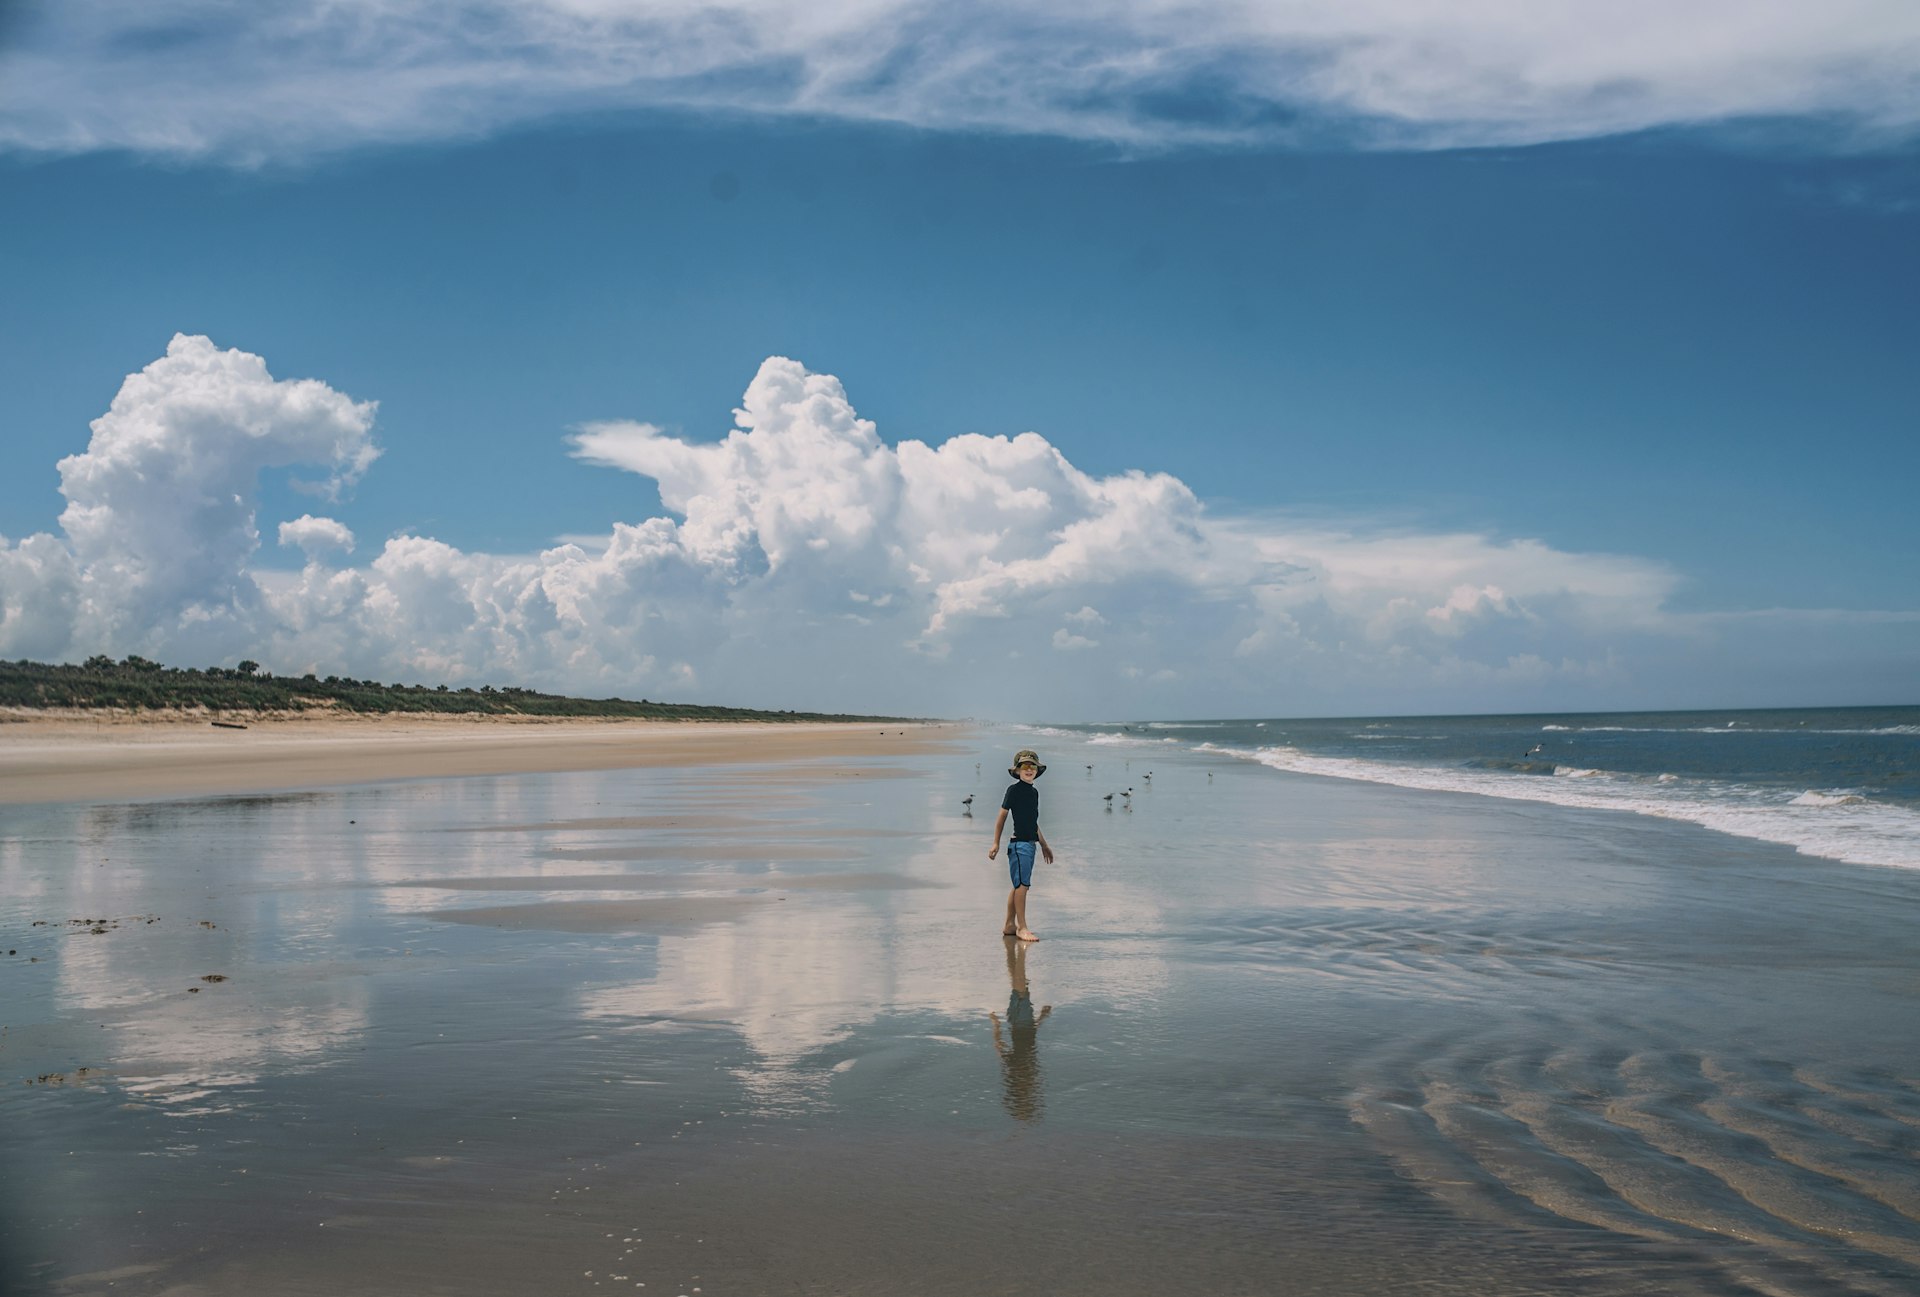 A boy stands on a wet expanse of sand at New Smyrna Beach, near Orlando, Florida